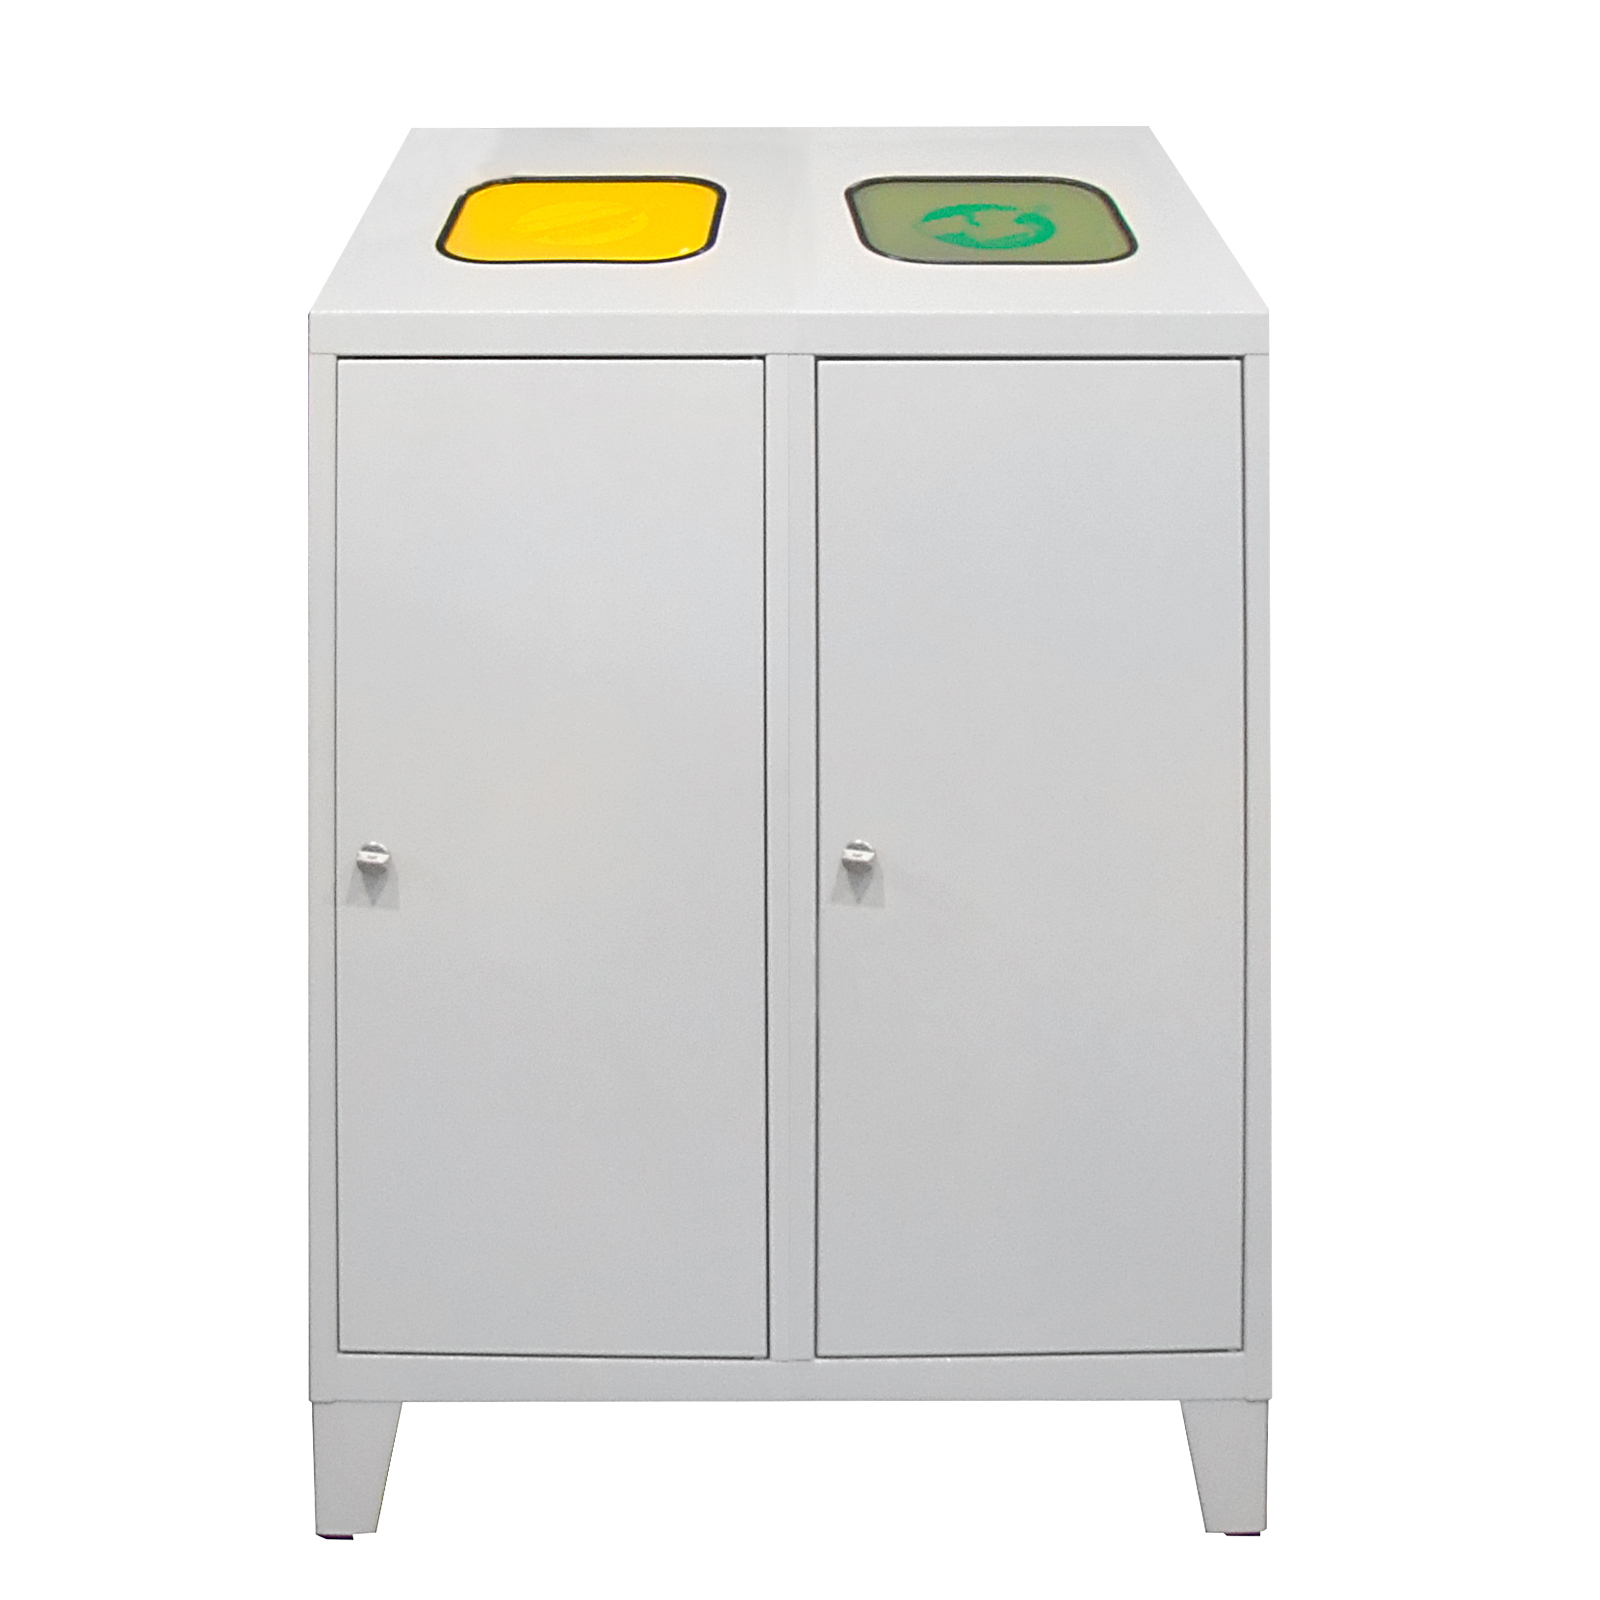 Recycling-Abfallsammler mit verzinktem Behälter Duo | HxBxT 122x80x45cm | 2x 120 Liter | Lichtgrau